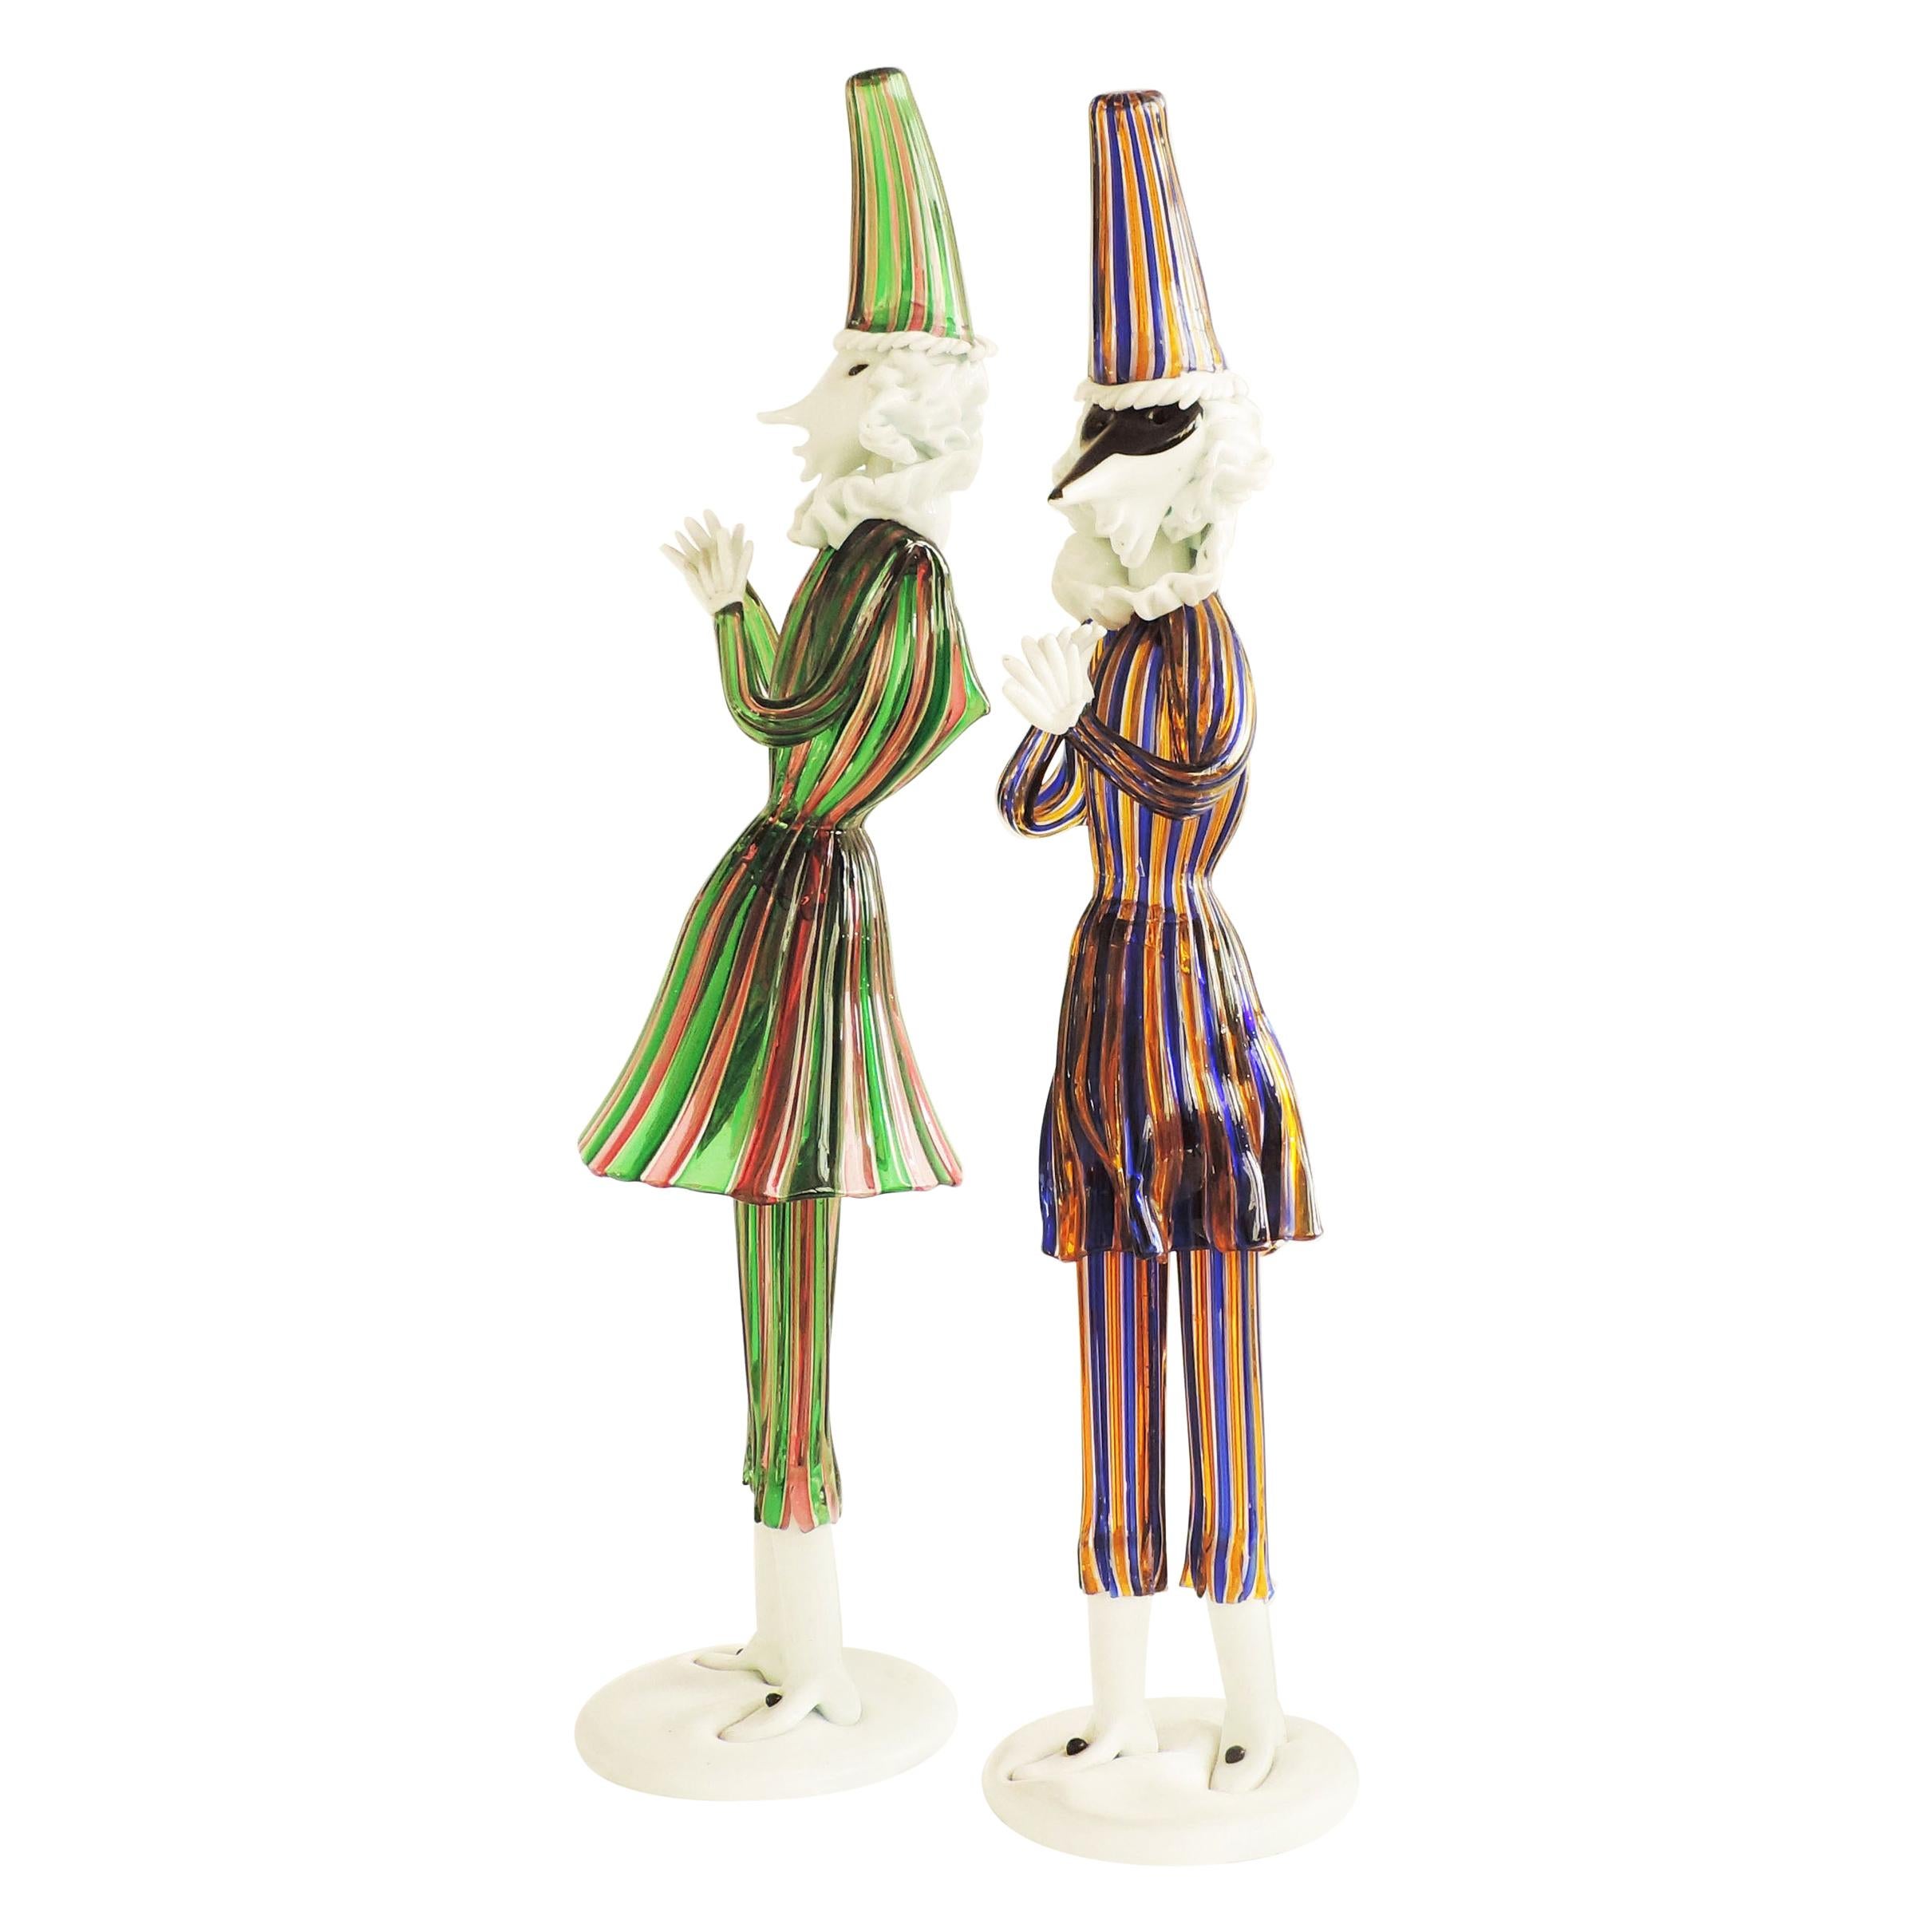 Splendid Pair of Murano Figurines, Italy 1950s